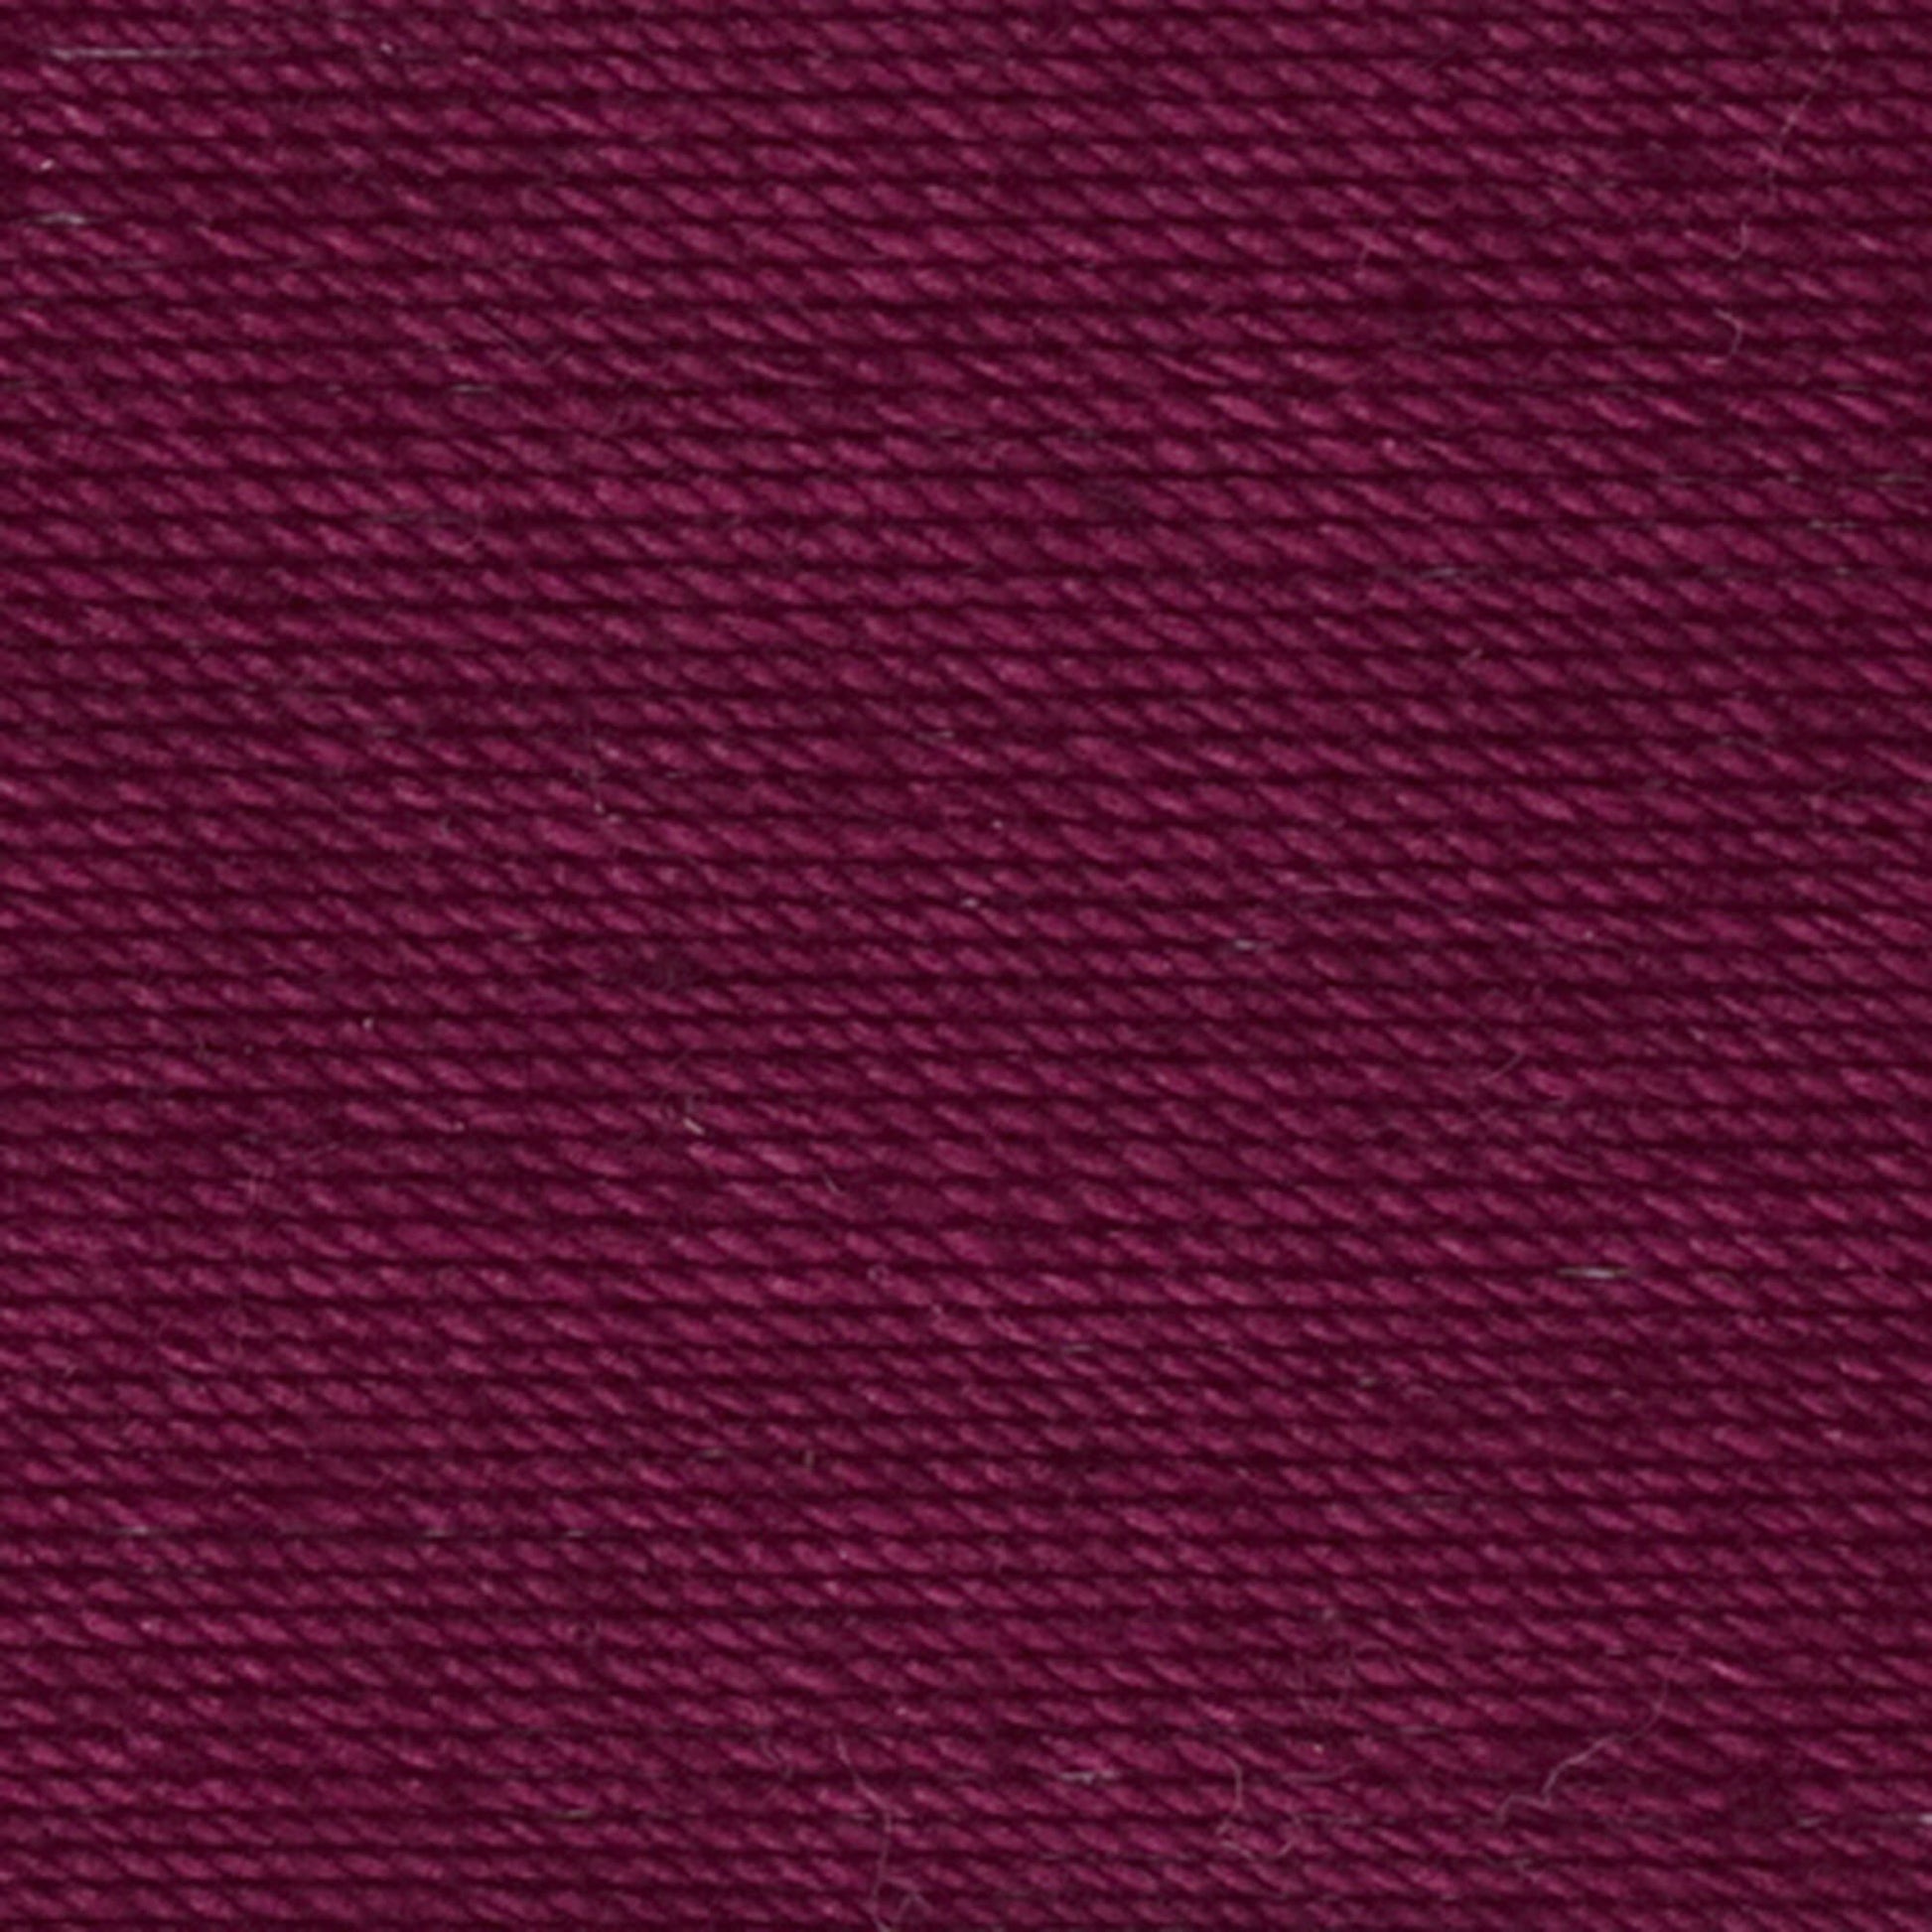 Coats Crochet Classic Crochet Thread, 10, Cardinal